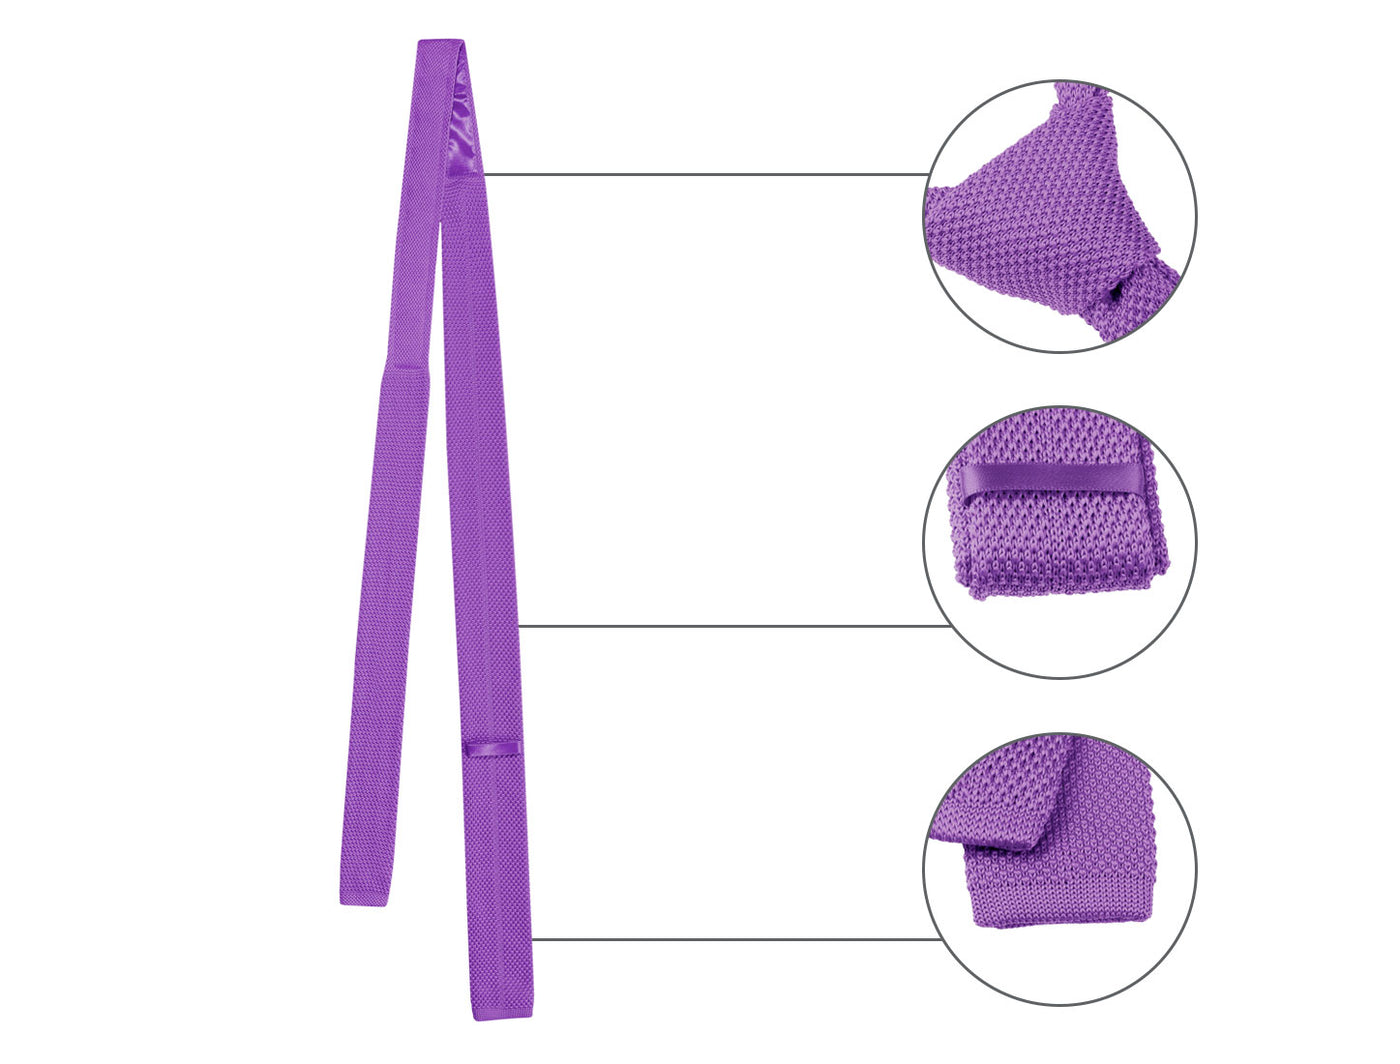 Allegra K Self-Tied Solid Color Skinny Flat Tips Designed Knit Ties